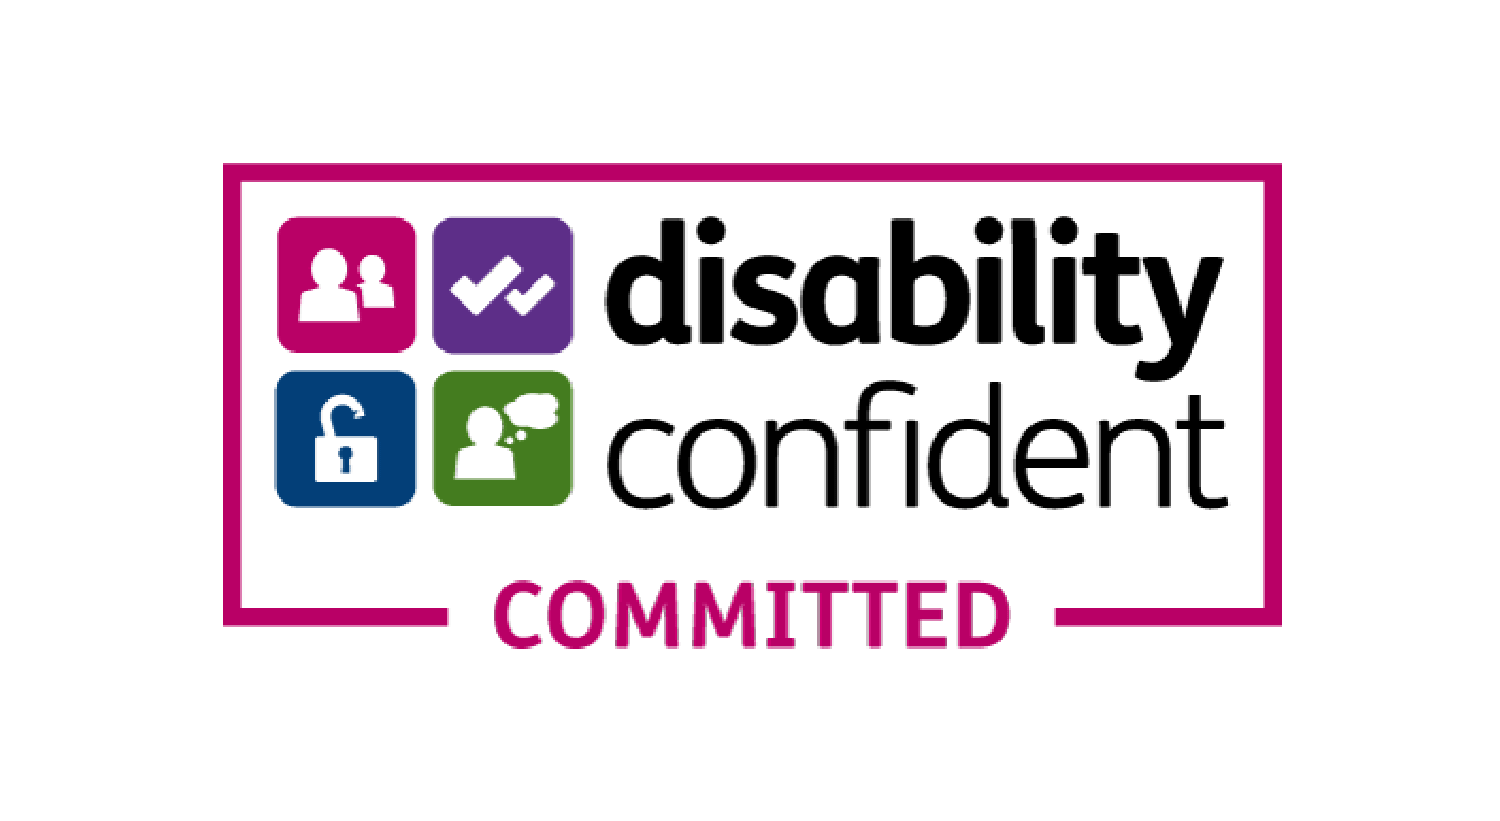 disability_logo_360px